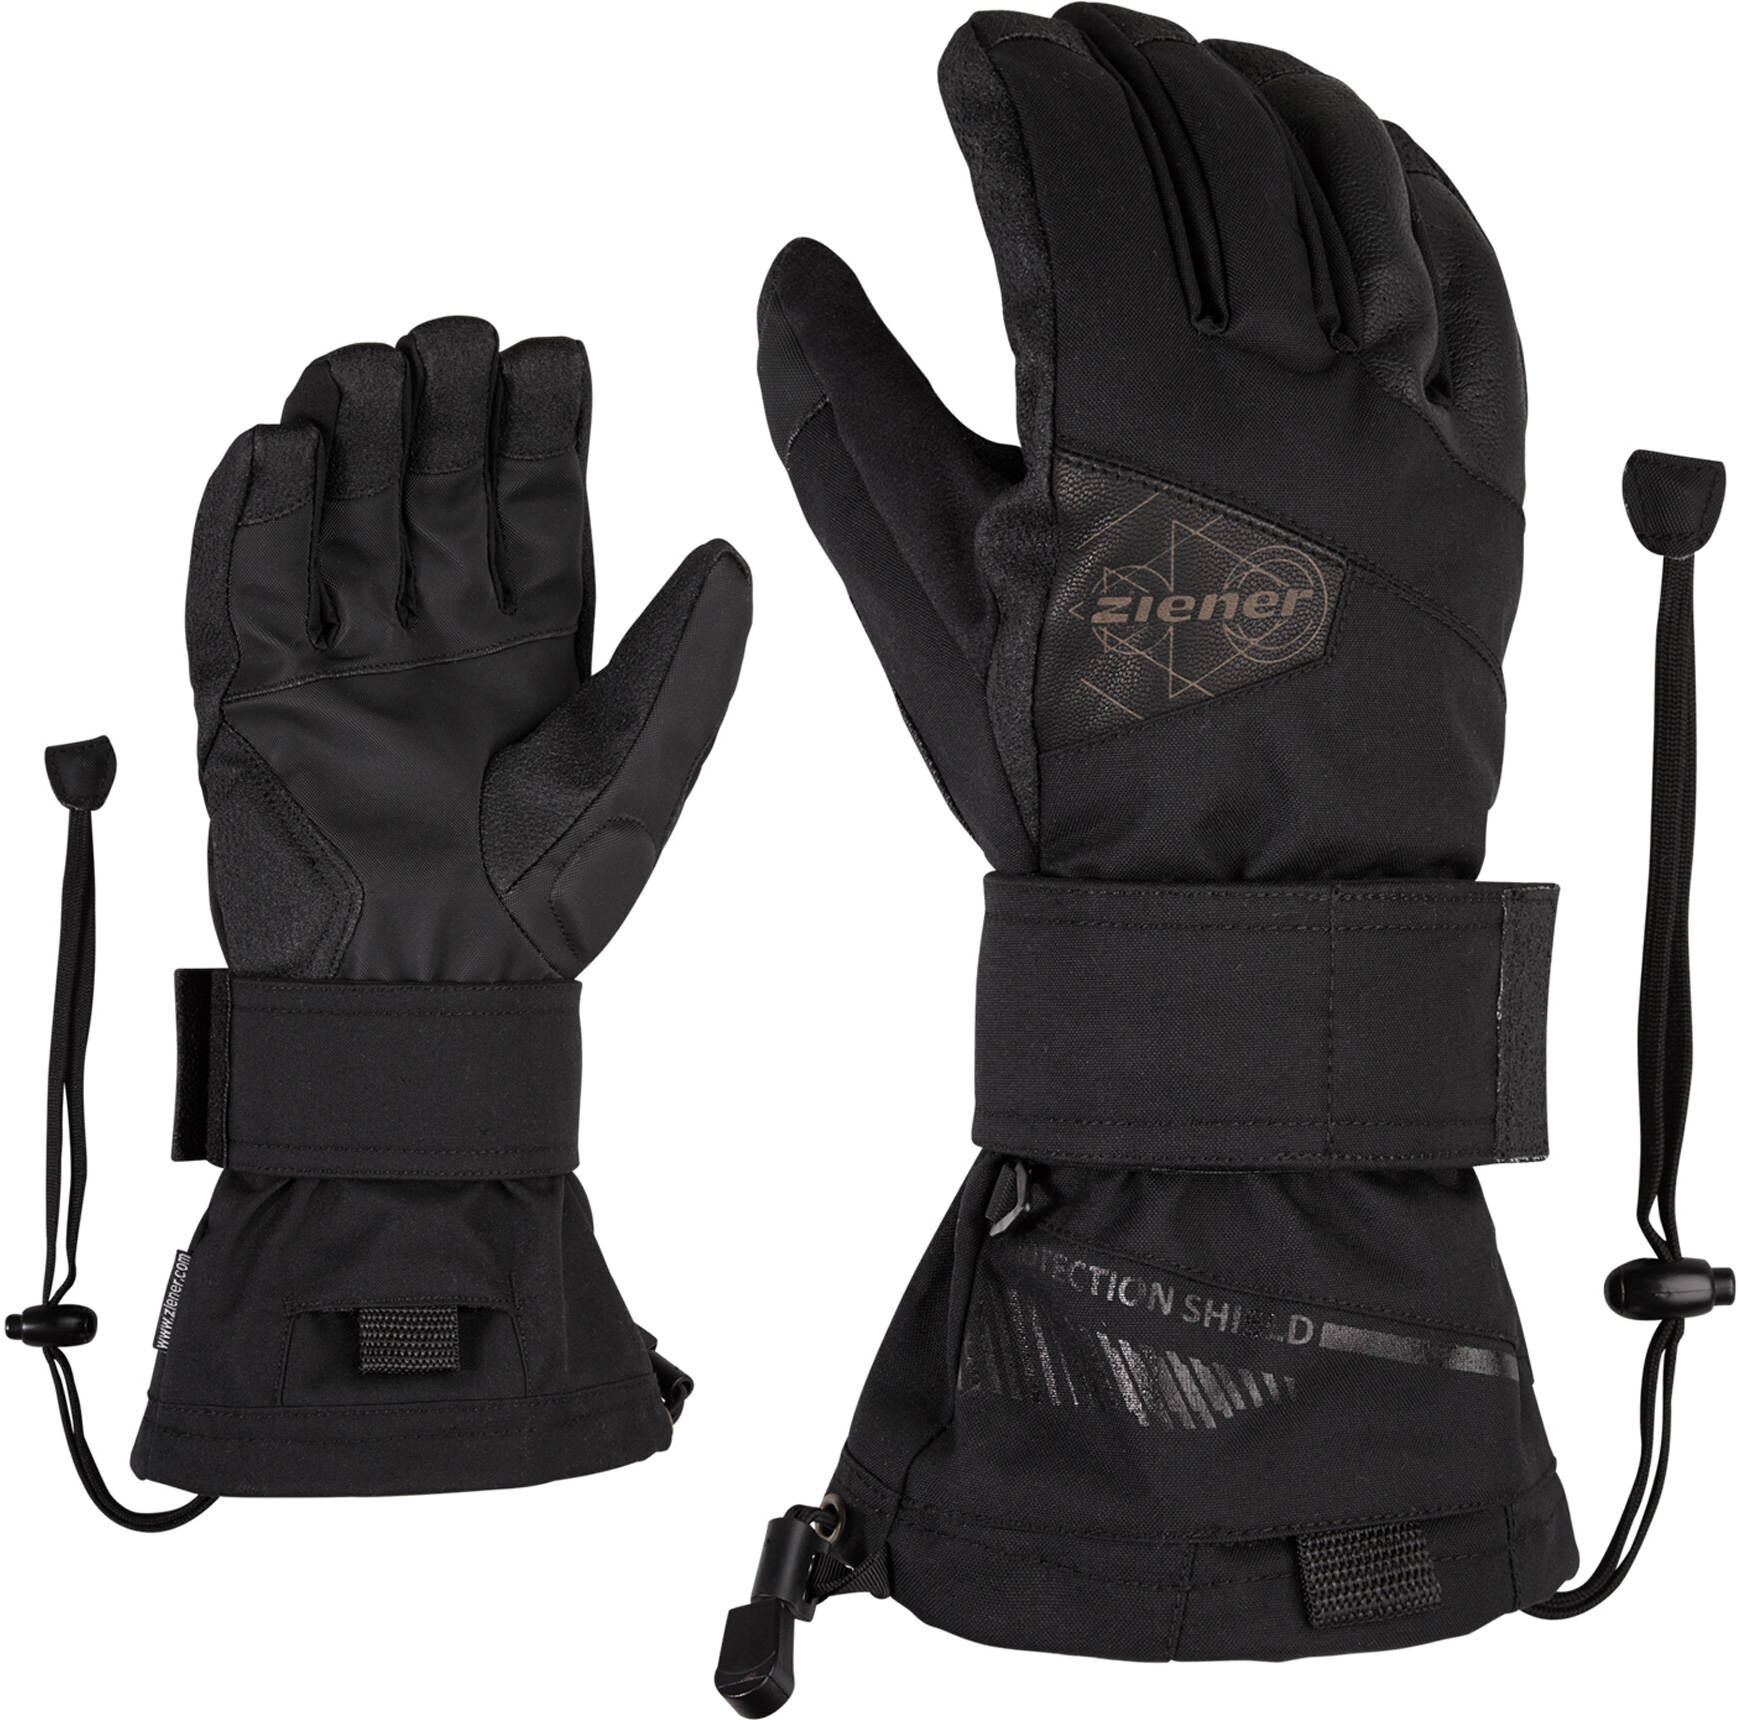 MAXIMUS AS(R) glove SB 12403 11 | Intersport Wolf